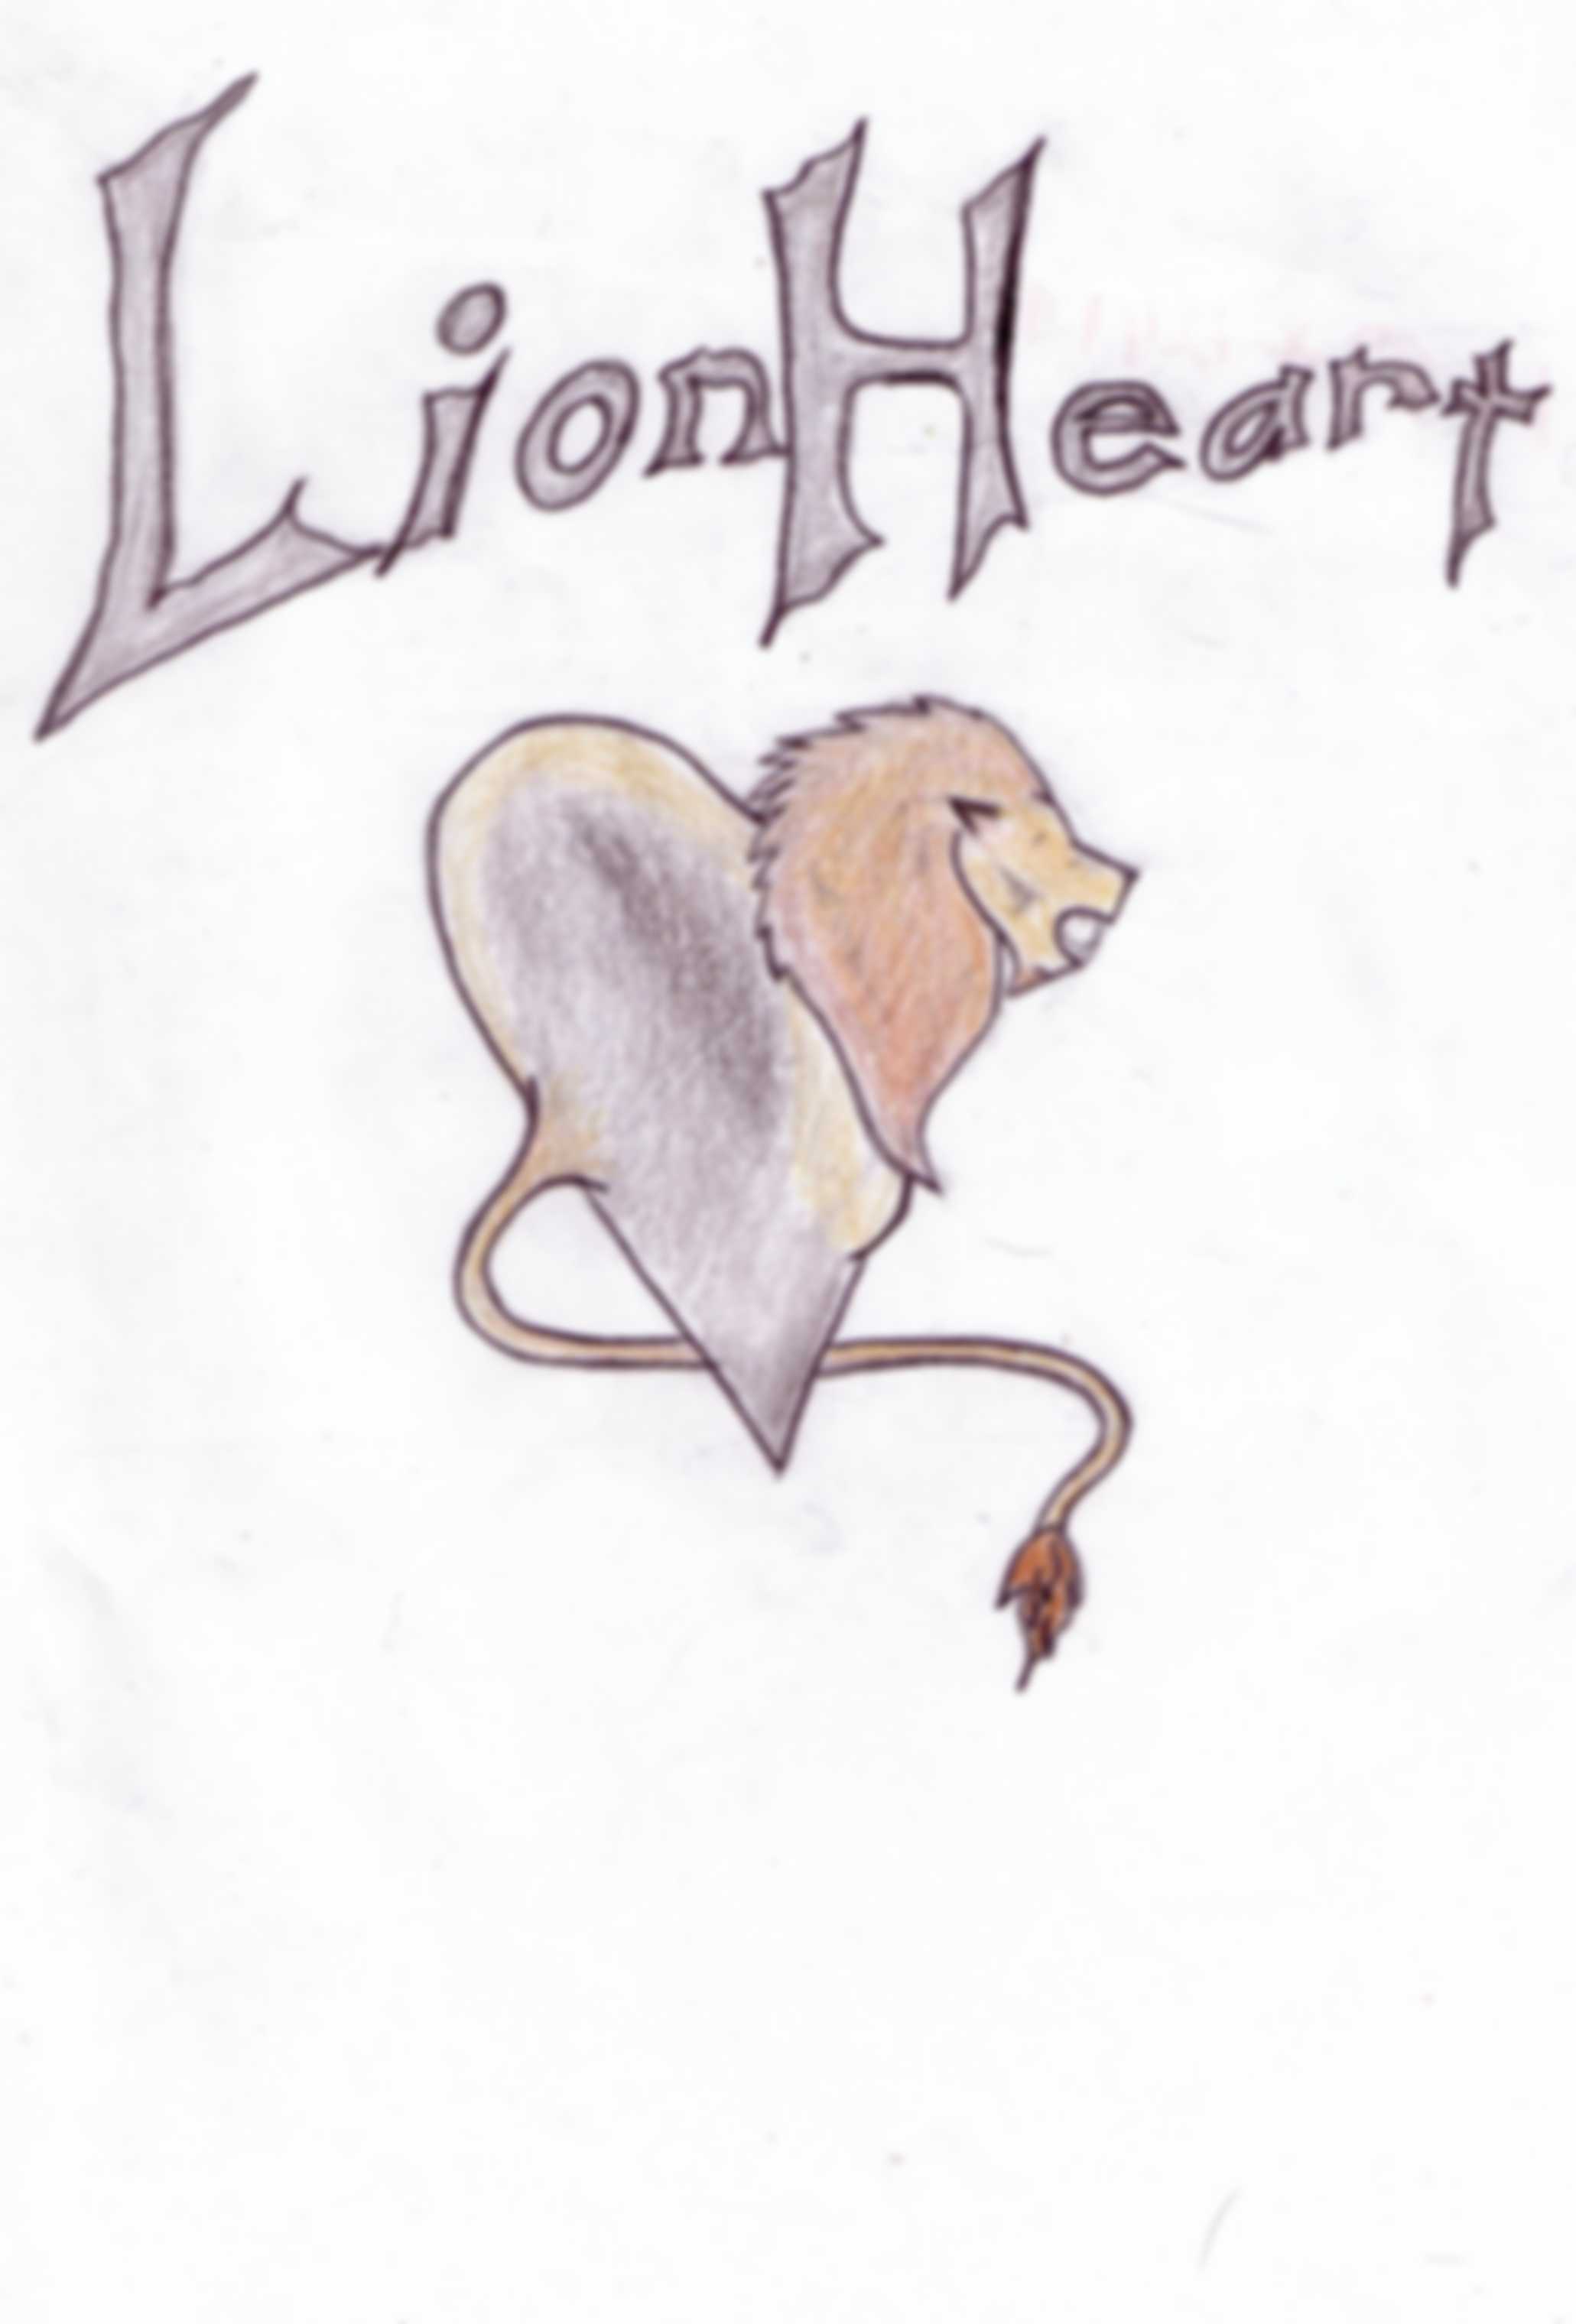 Lionheart by Mr_Saxophone